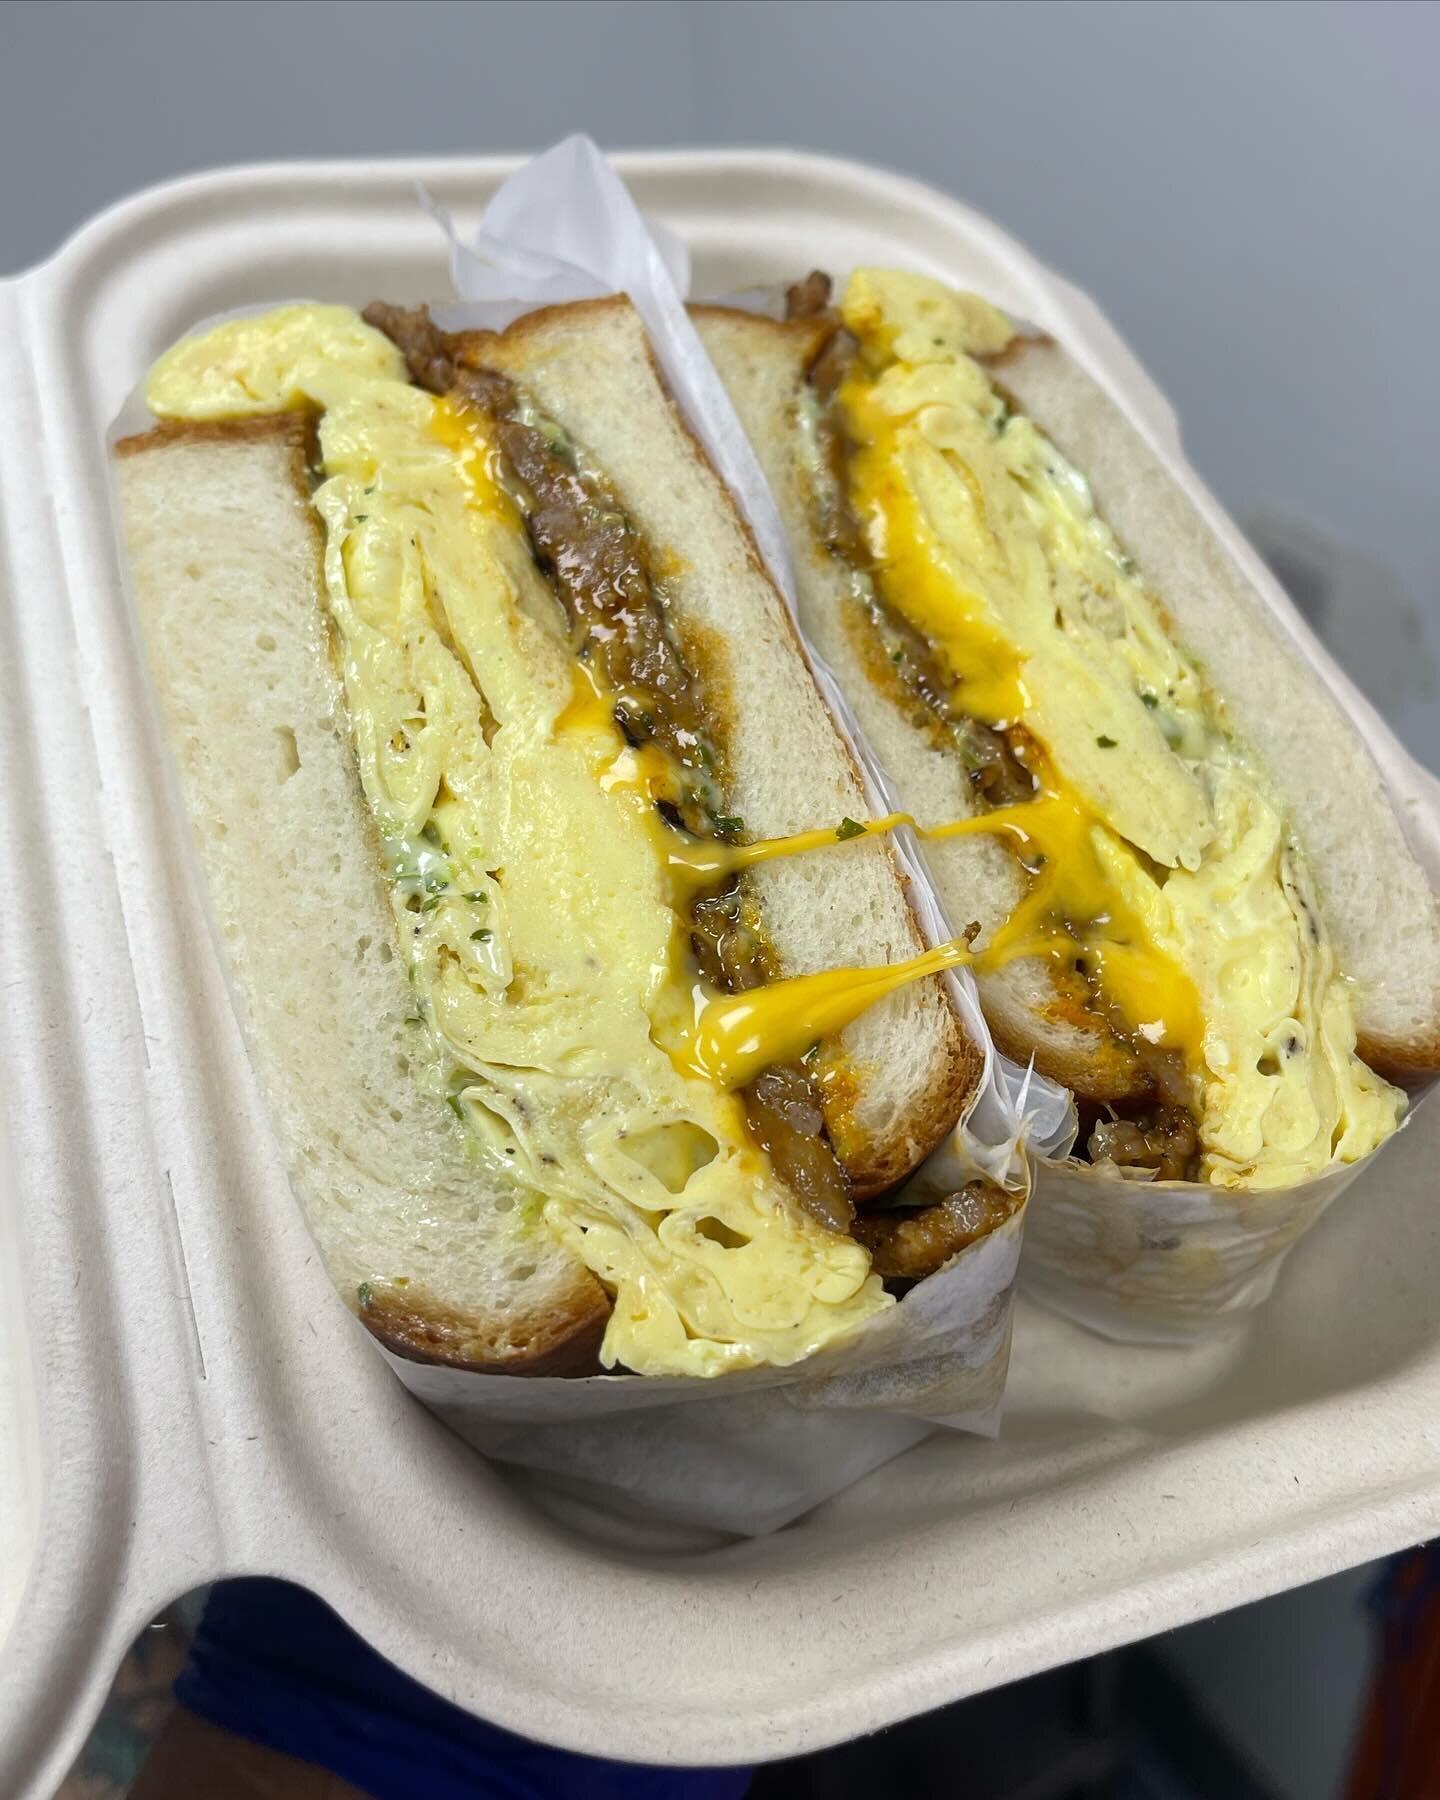 Longaniza Sando. House made longaniza patty, eggs, American cheese, kewpie mayo on shokupan. 

#bakery #breakfast #filipinofoodmovement #filipinofoods #sando #nomnom #yum #shokupan #sanjose #siliconvalley #bayarea #bayareaeats #nomnom #supportsmallbu